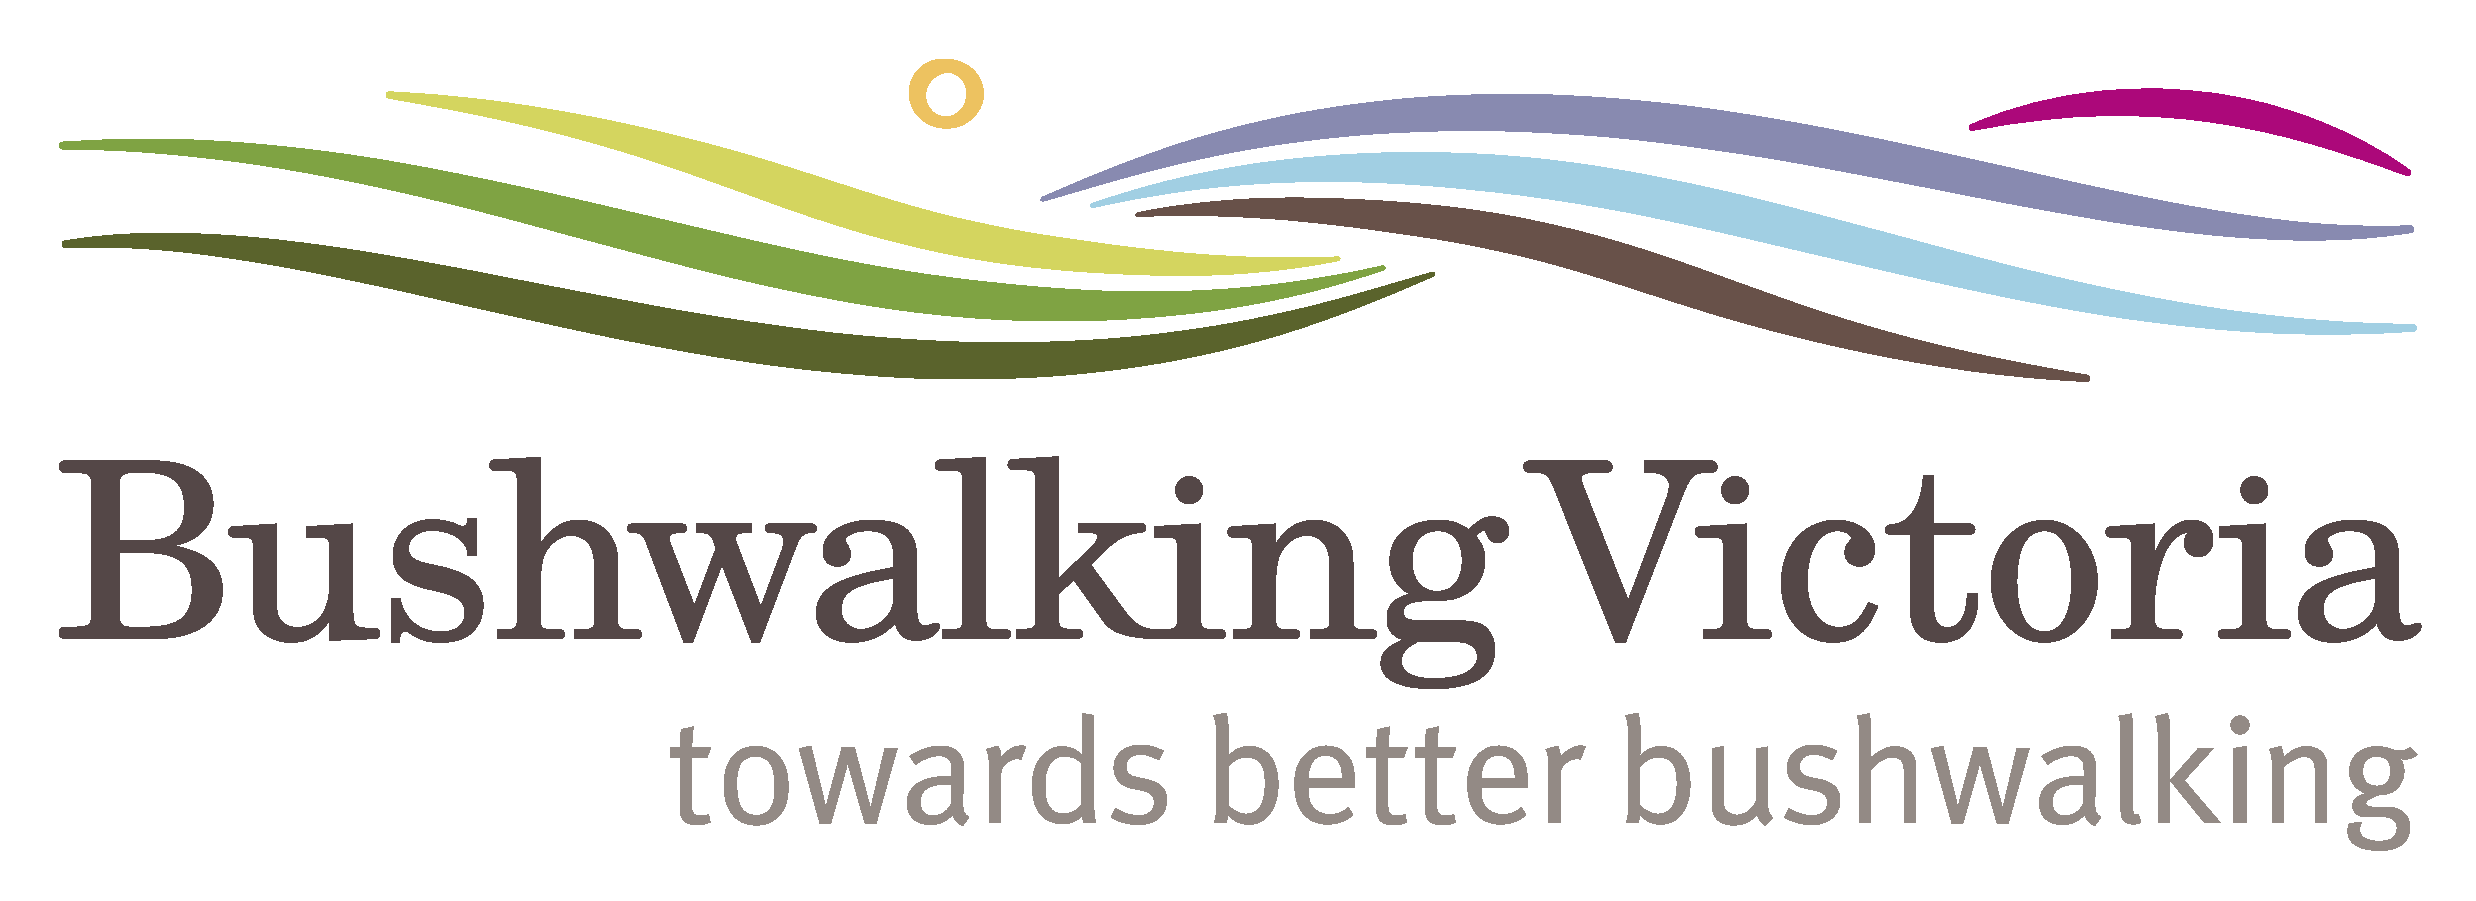 Bushwalking Vic logo with tagline 2